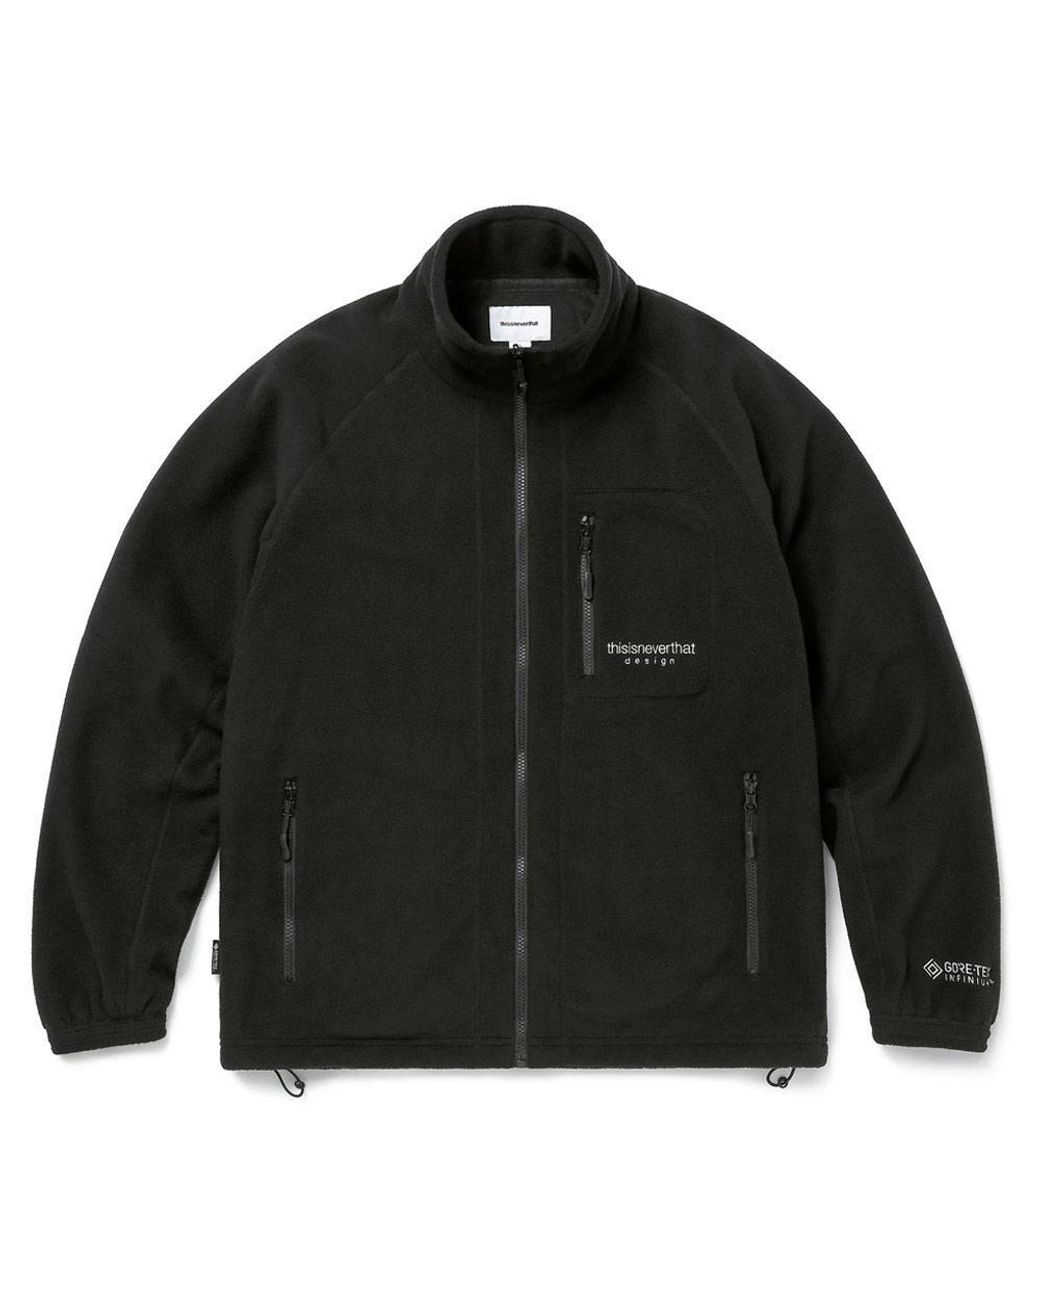 Thisisneverthat Gore-tex Infinium Fleece Jacket in Black for Men - Lyst